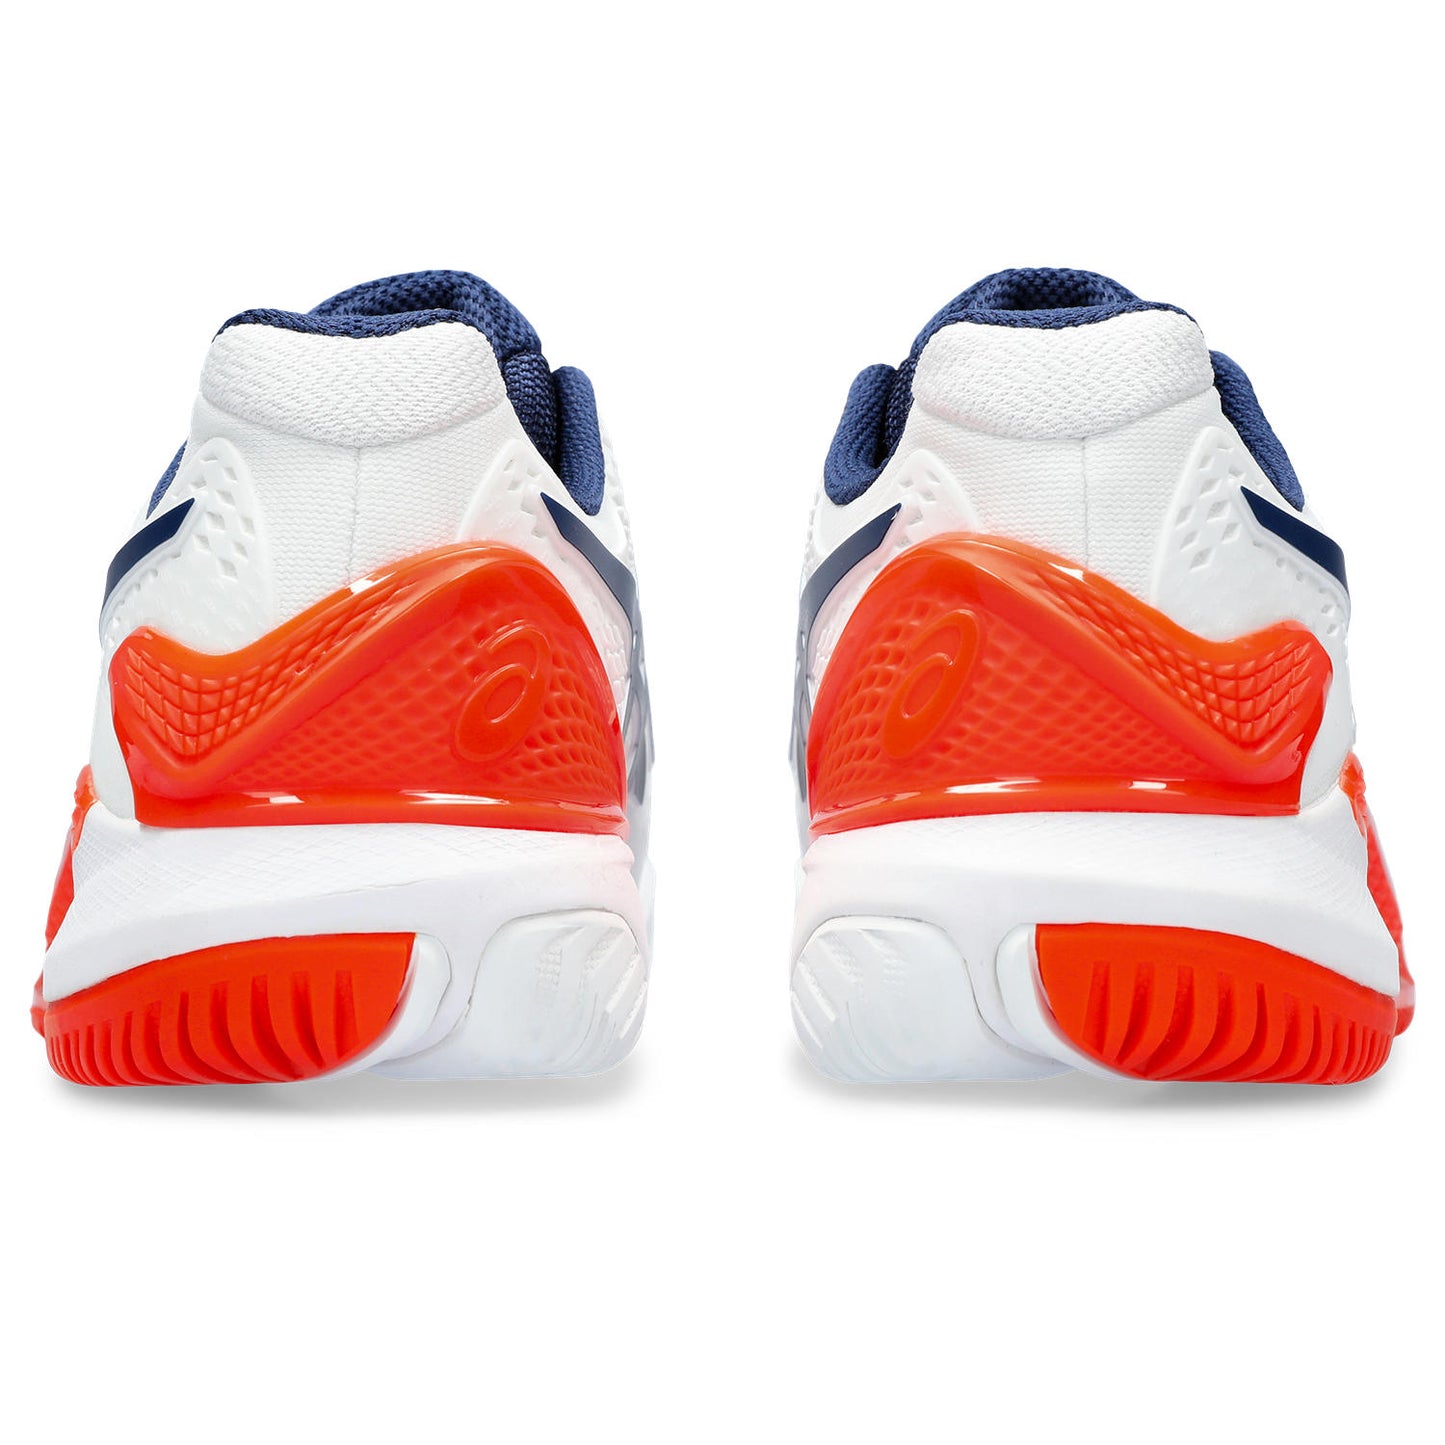 Asics Gel Resolution 9 Men tennis shoes 330.102 White/Blue/Orange